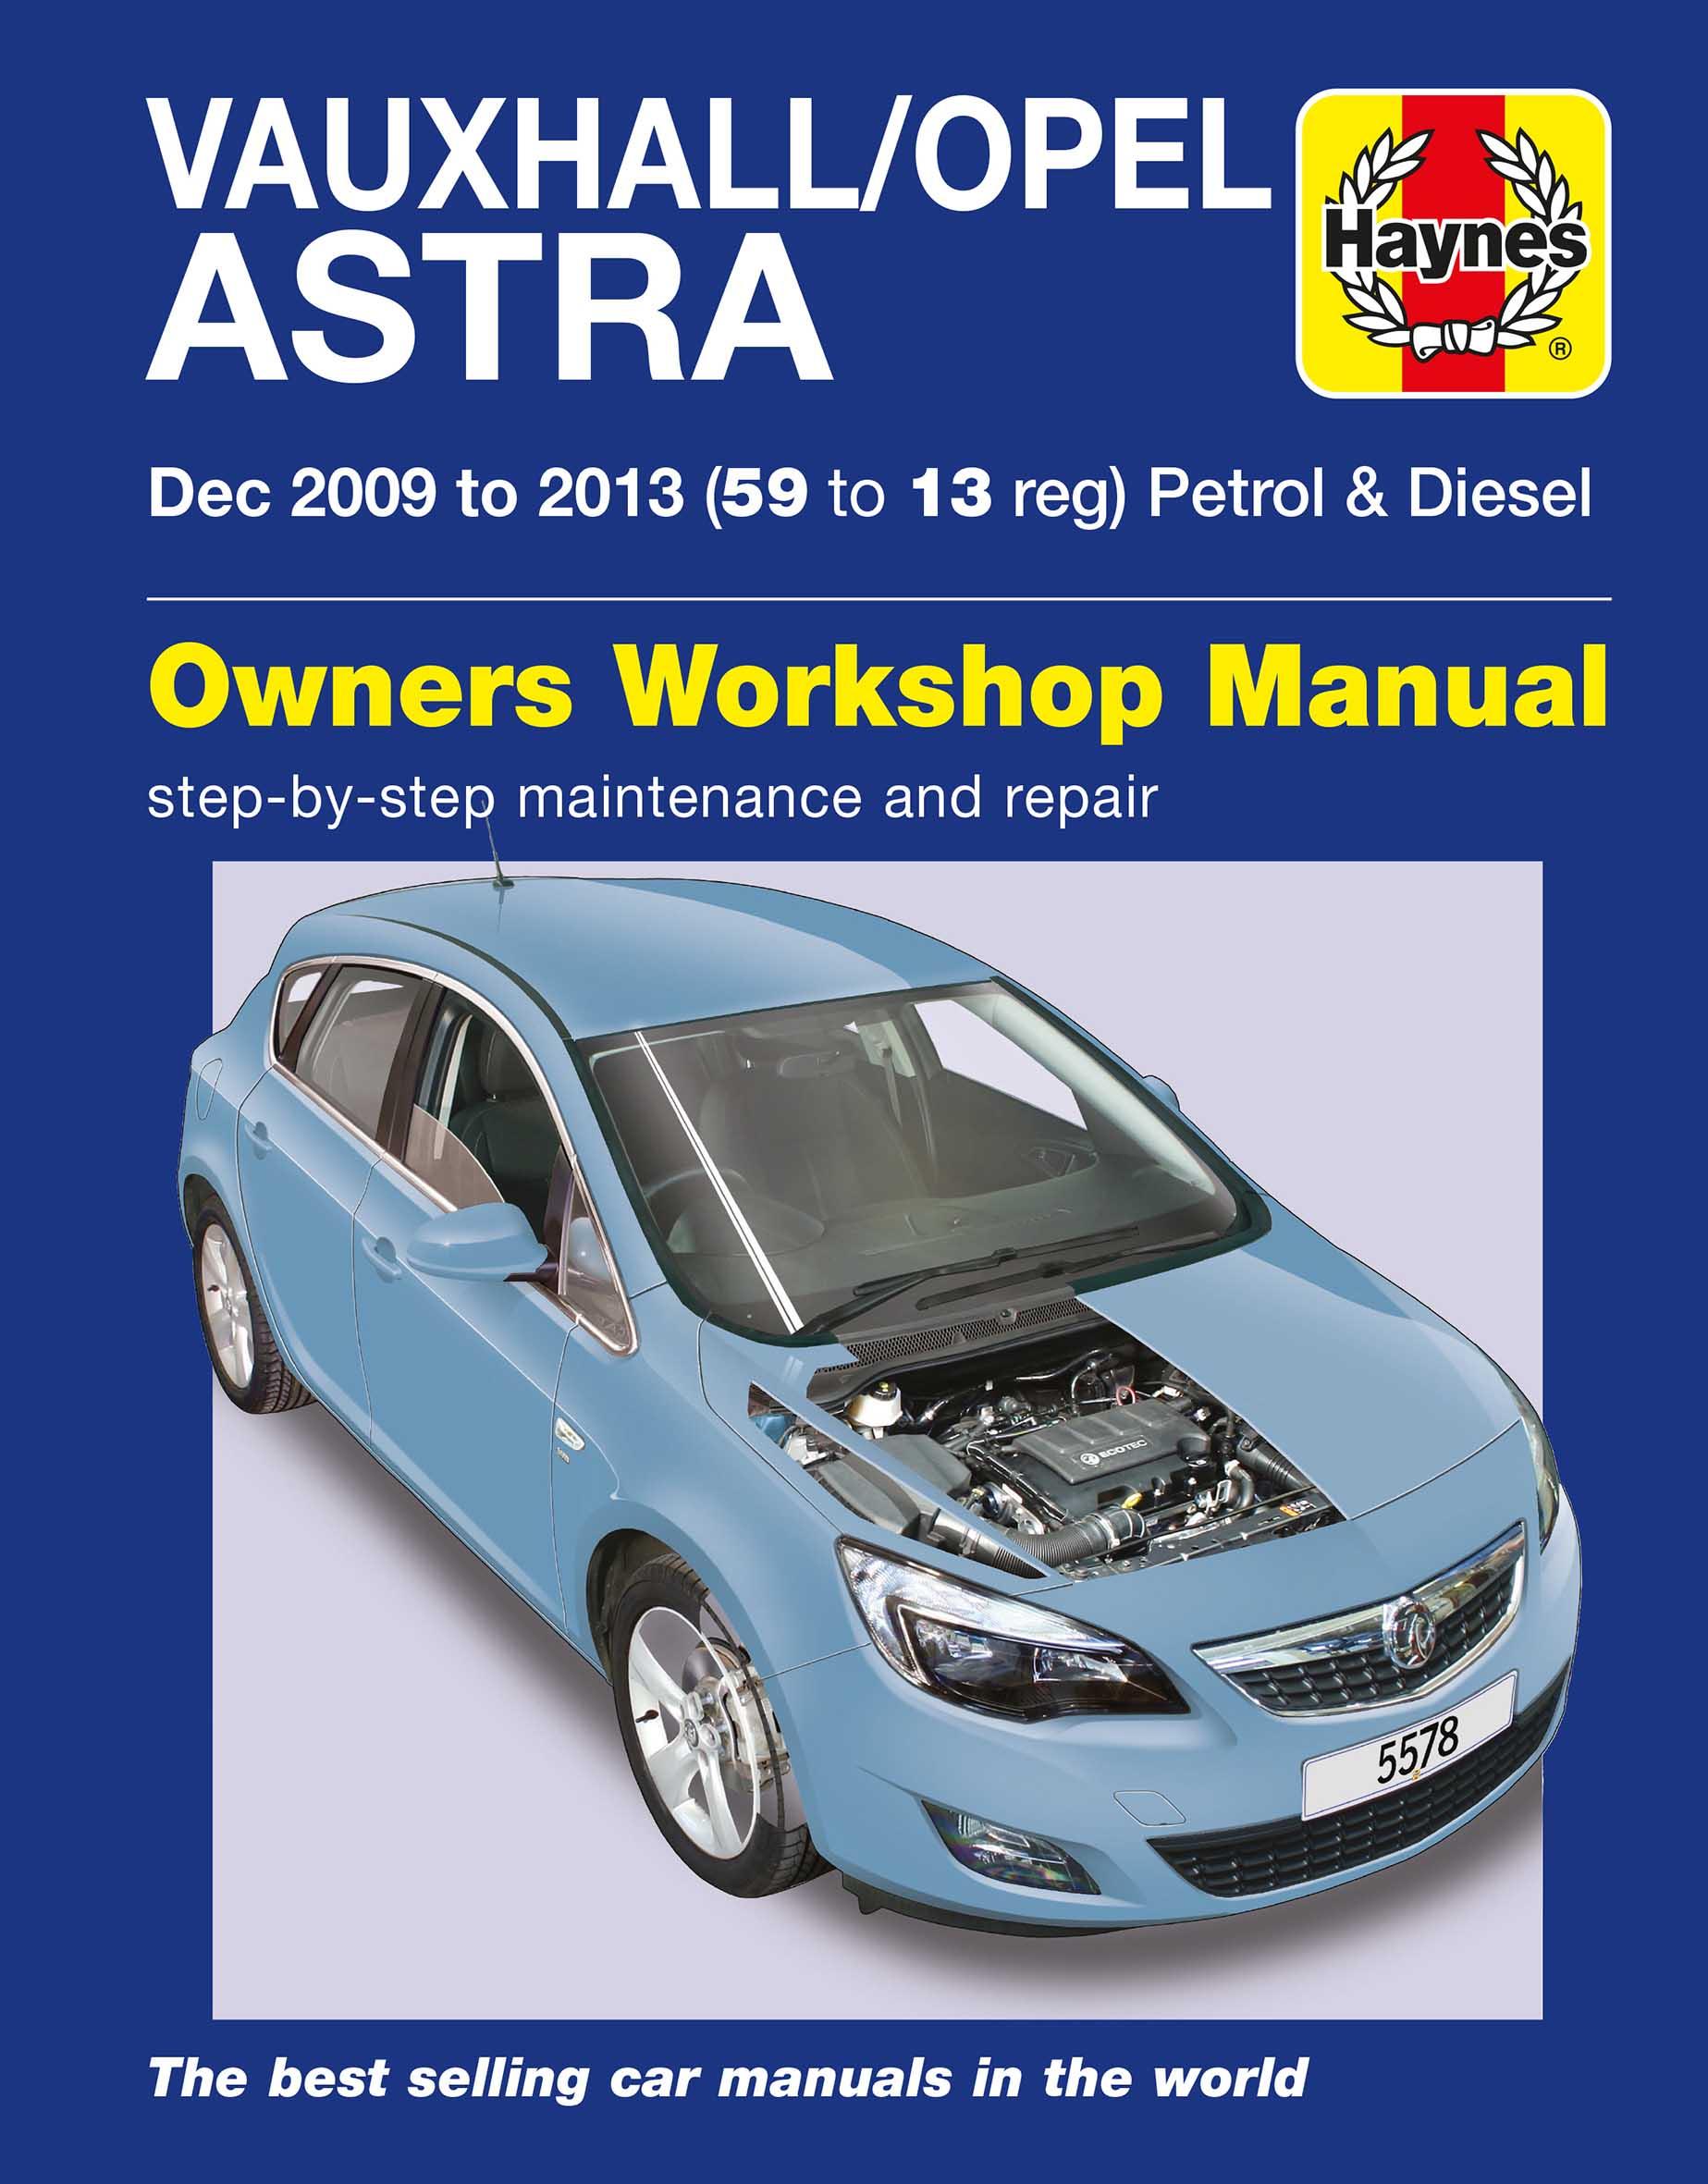 Haynes Vauxhall/Opel Astra Manual (Dec 09 - 13) 59 To 13